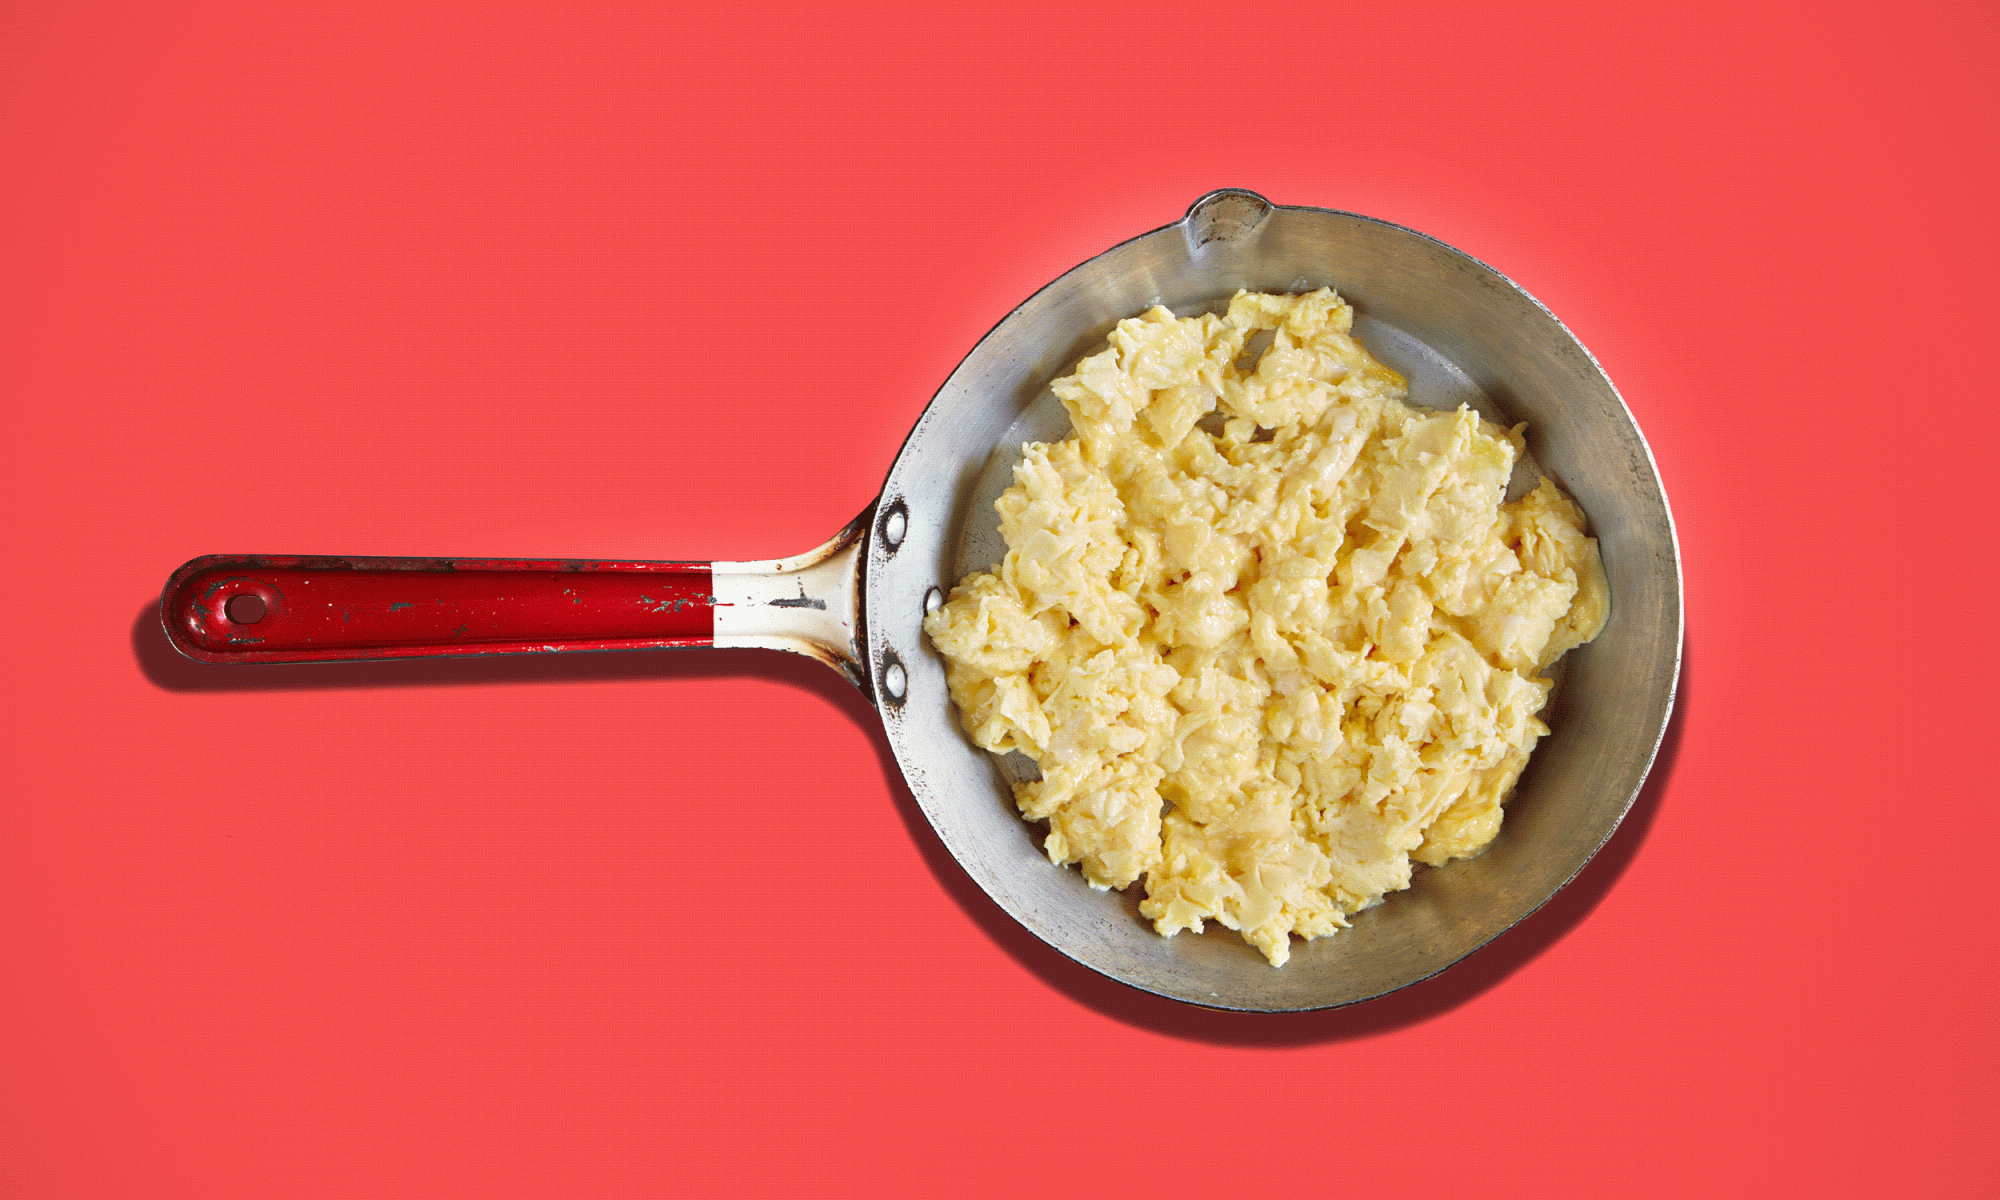 How to Make the Best Scrambled Eggs - Easy Scrambled Eggs Recipe